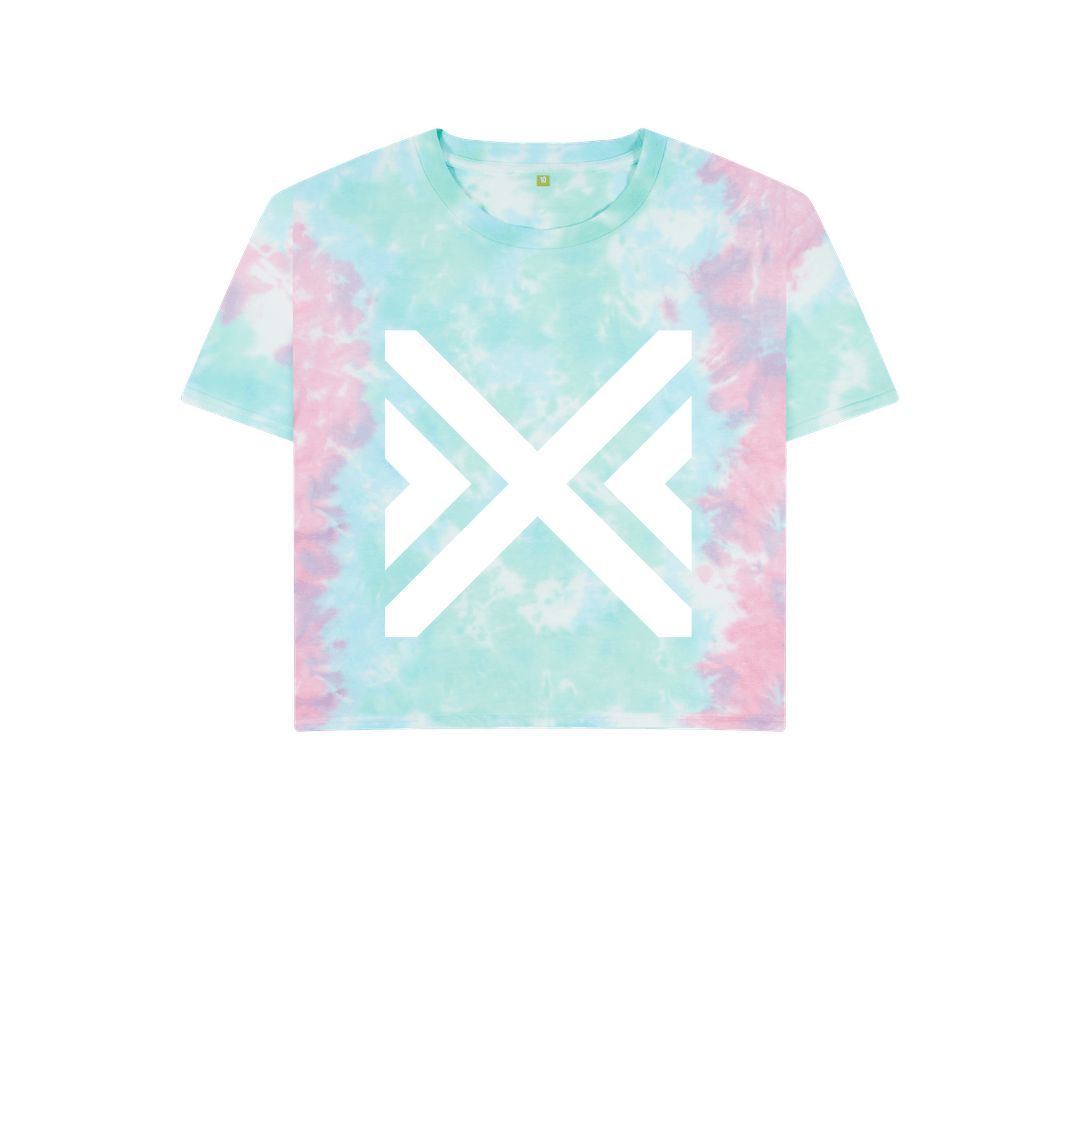 Pastel Tie Dye Cross T-shirts - Women's Boxy Tees